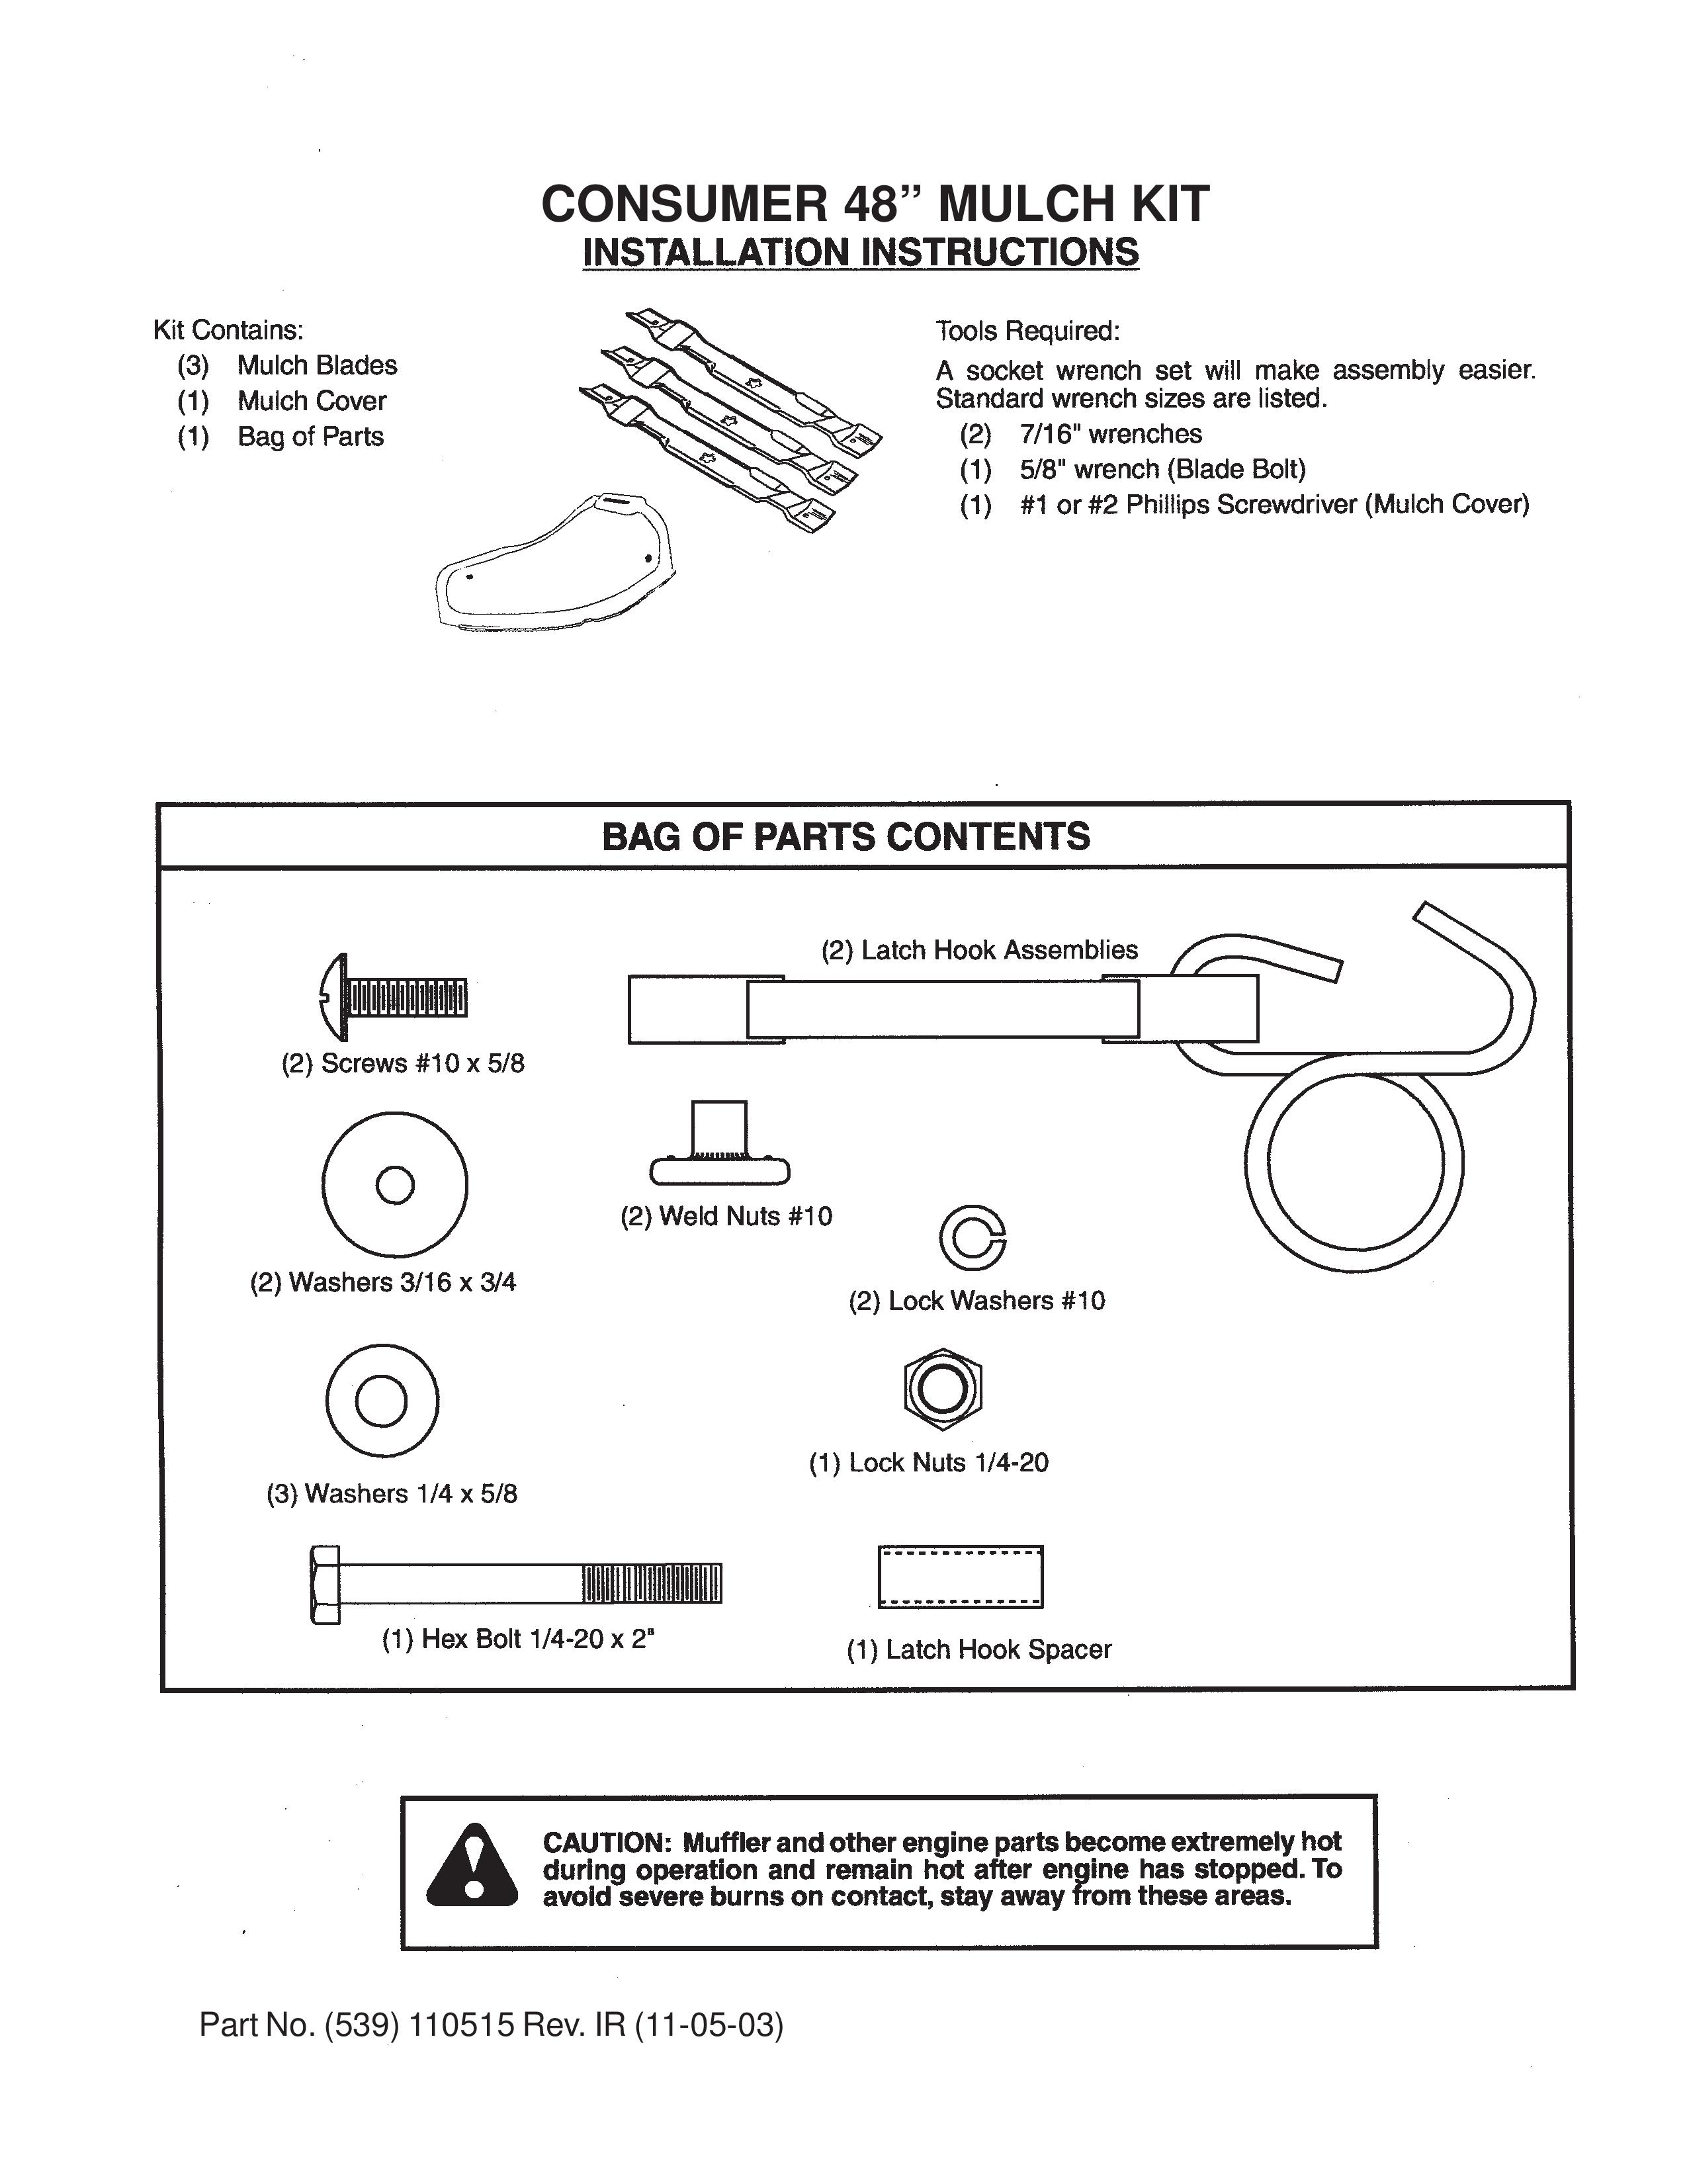 Yazoo/Kees Consumer 48" Lawn Mower User Manual